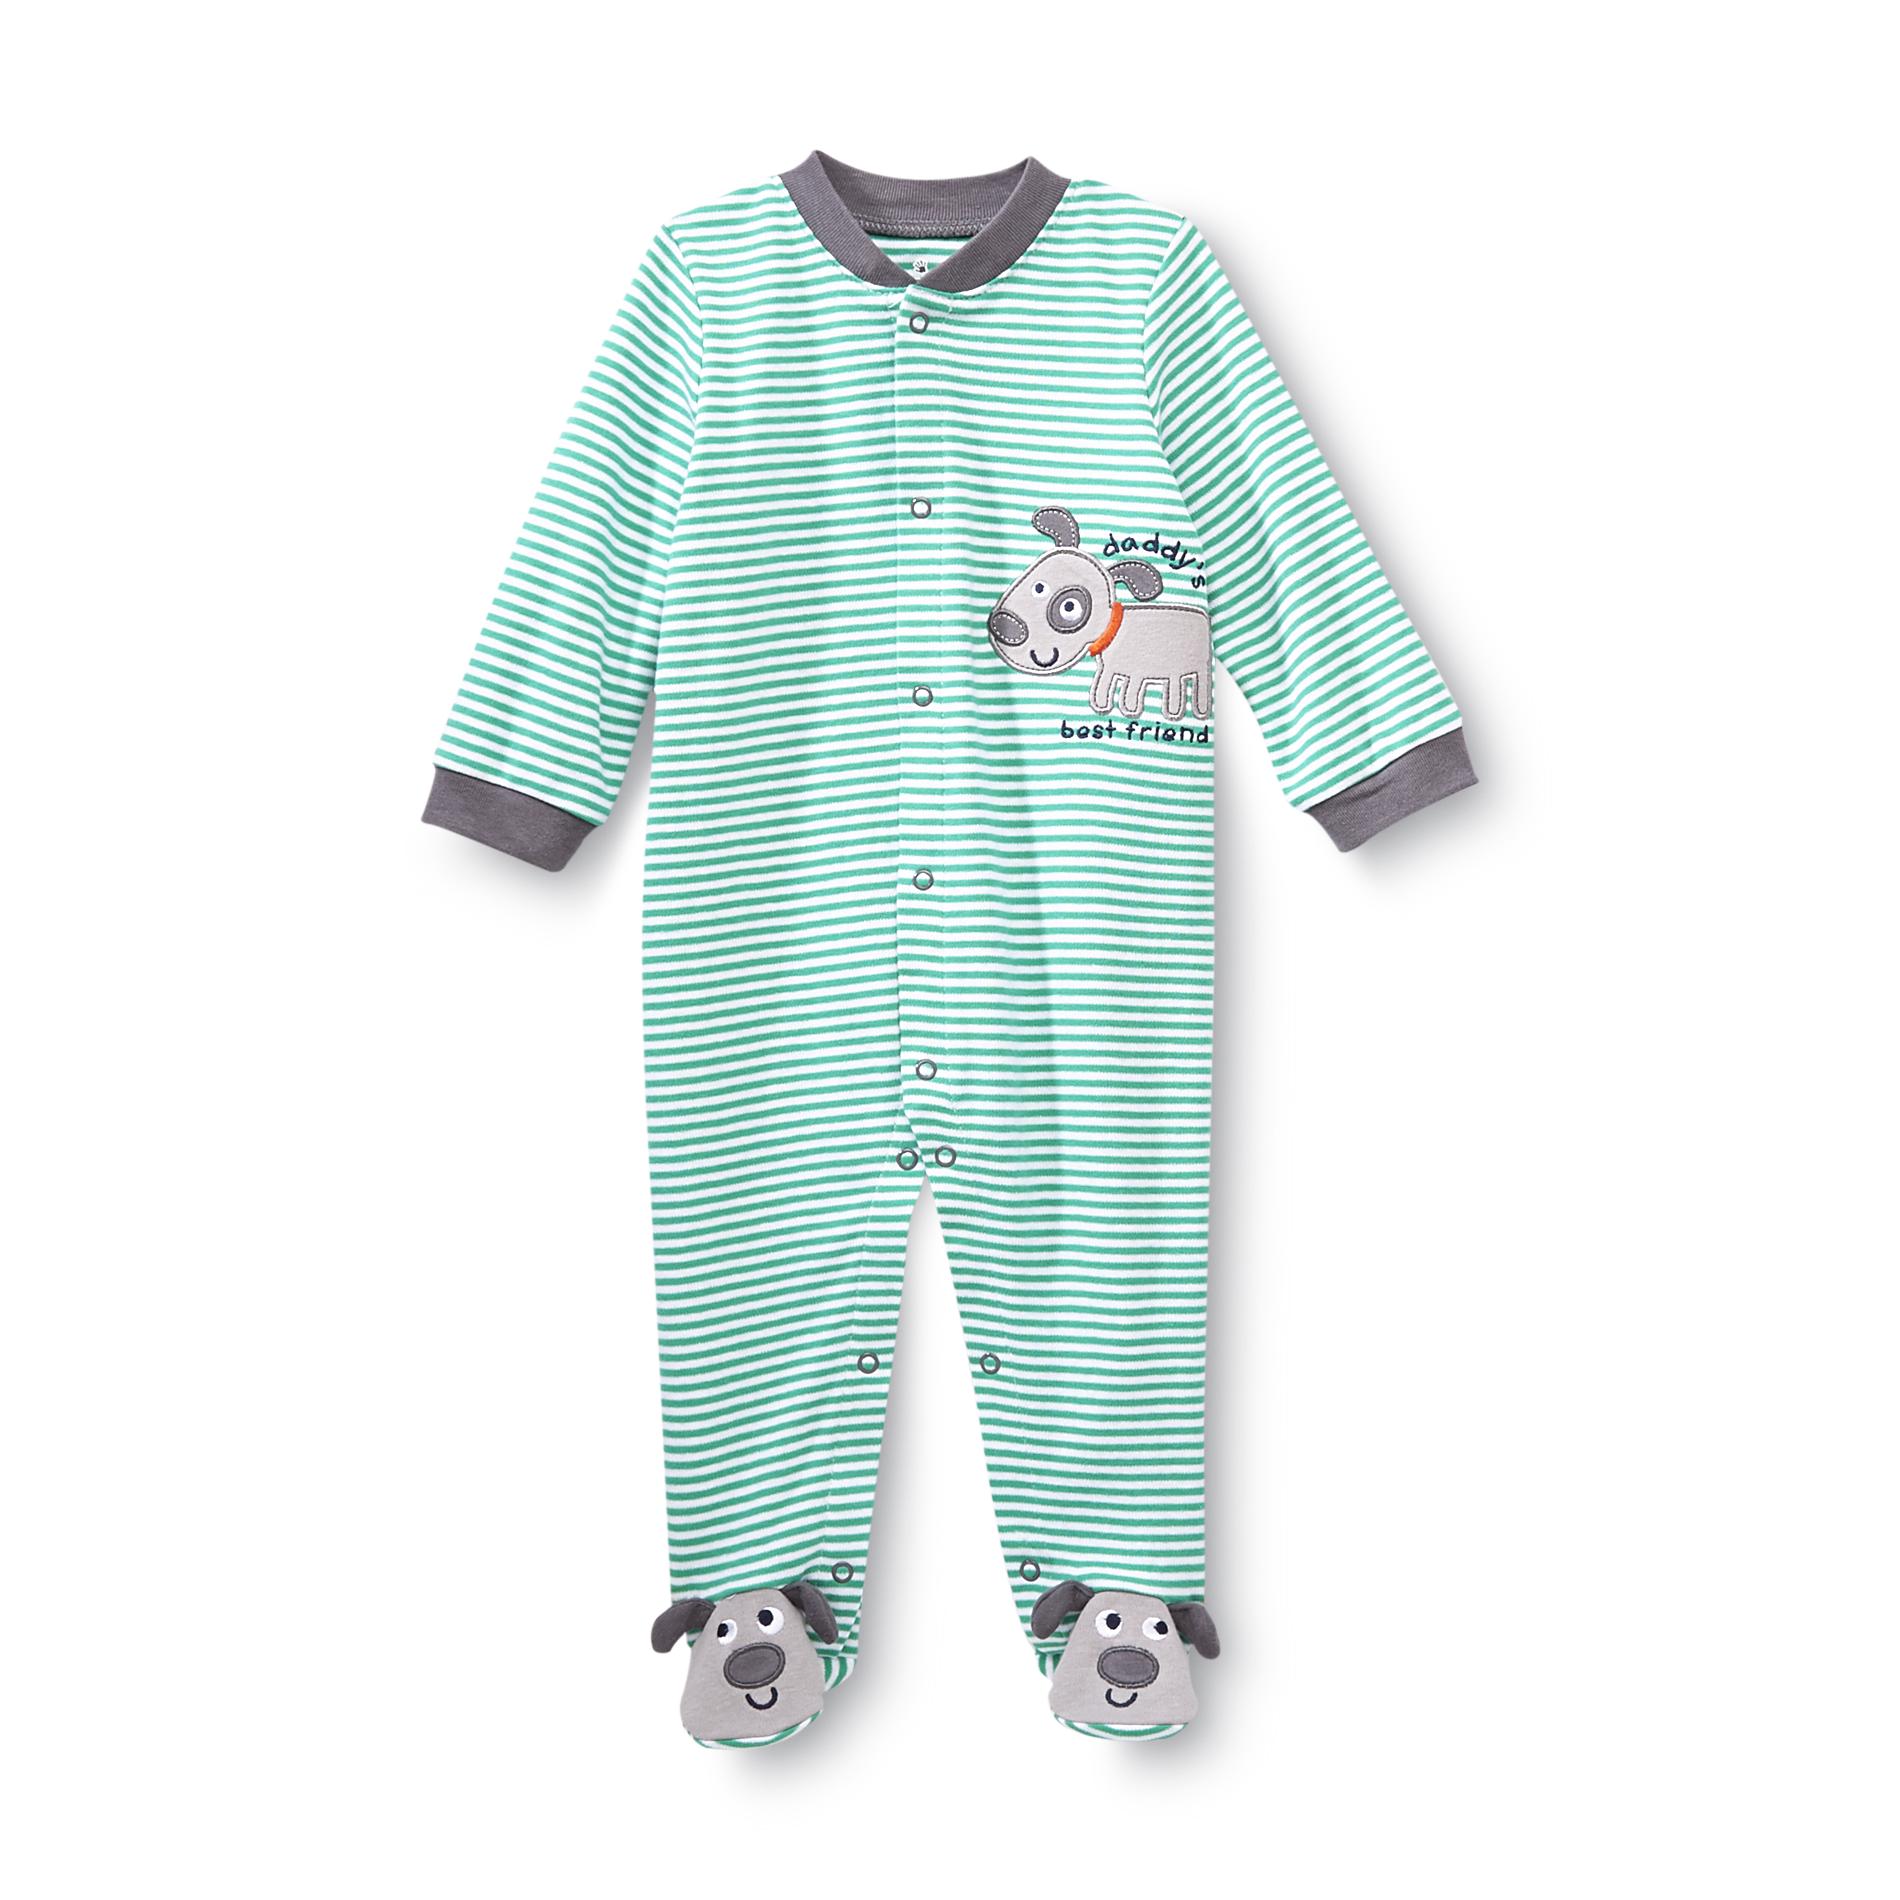 Small Wonders Newborn Boy's Sleeper Pajamas - Puppy